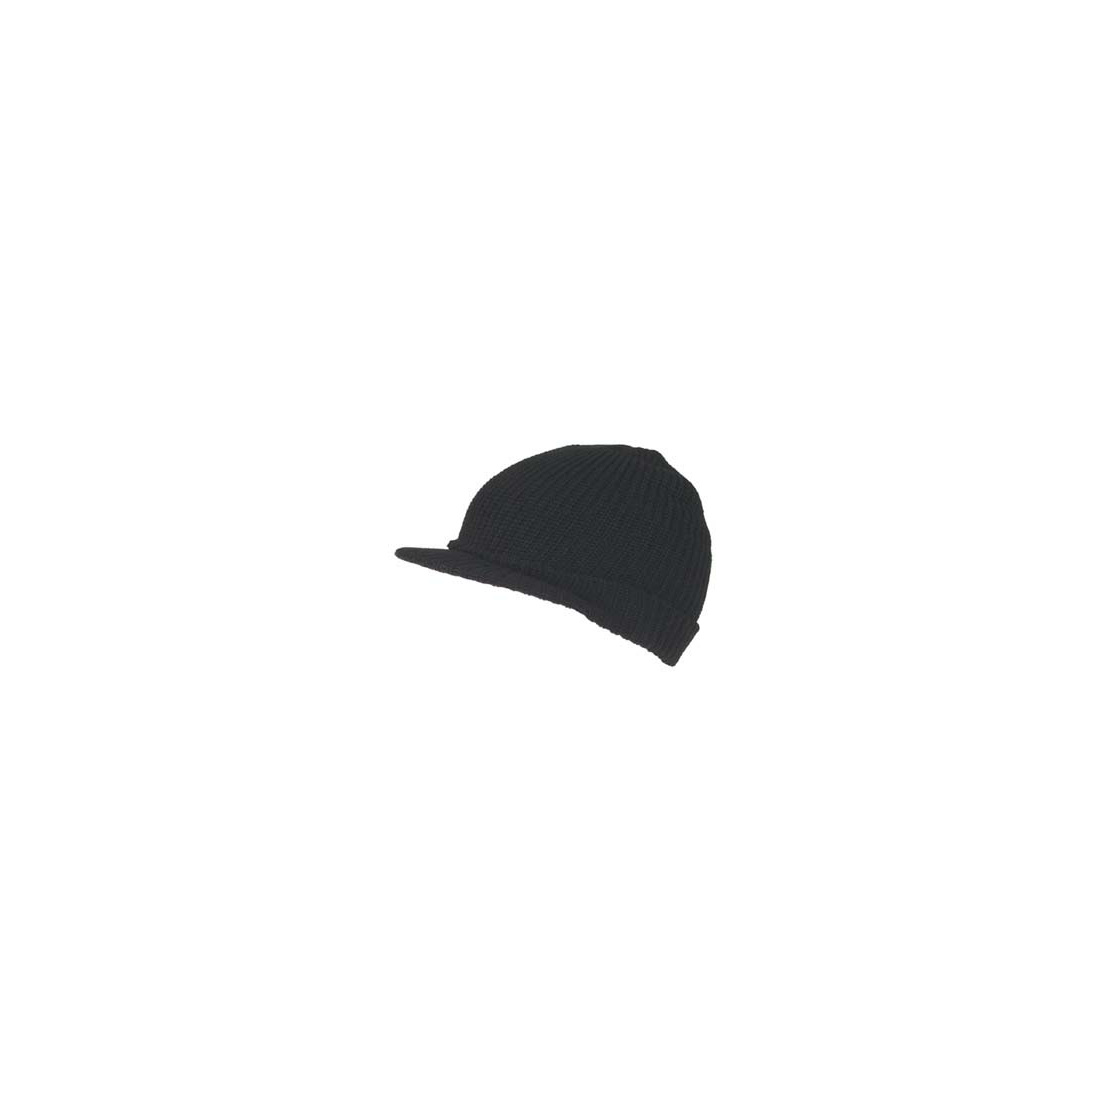 US Schild-Mütze Cap, Acryl, schwarz